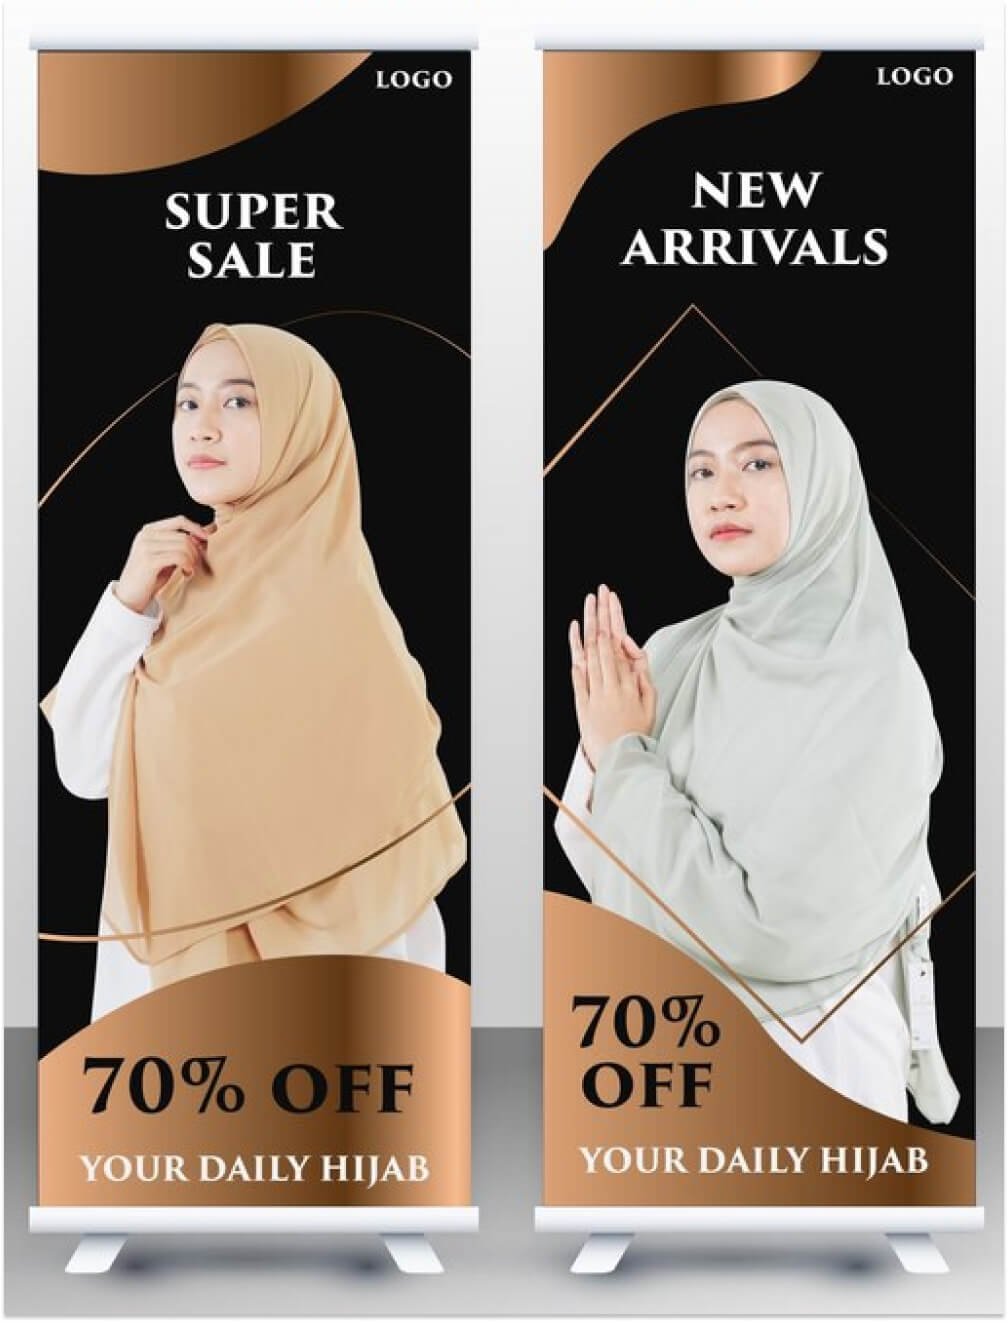 Contoh-Desain-Standing-Banner-Hijab